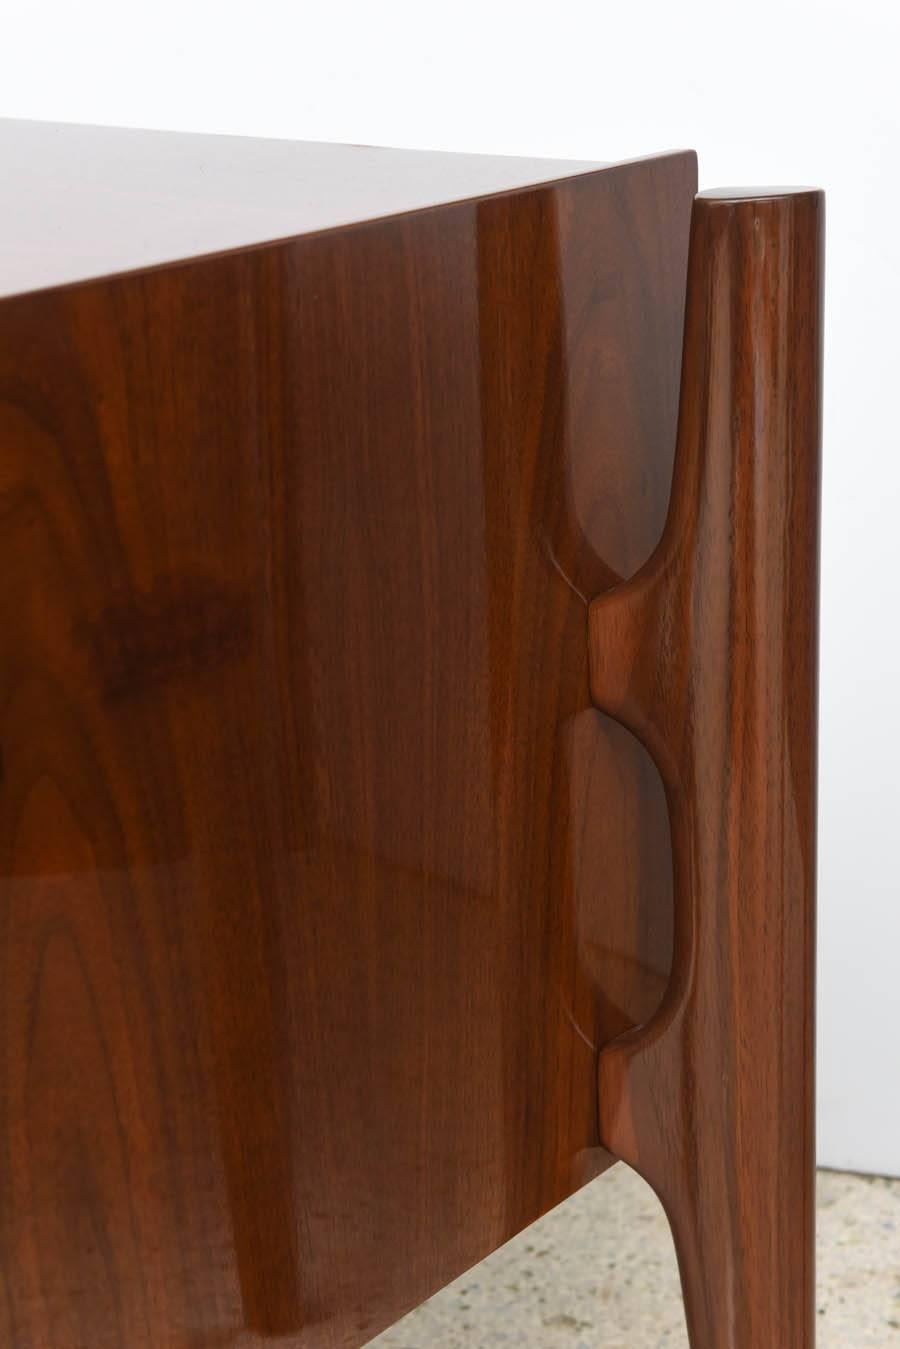 Pair of American Modern Walnut Bedside Cabinets, William Hinn 1